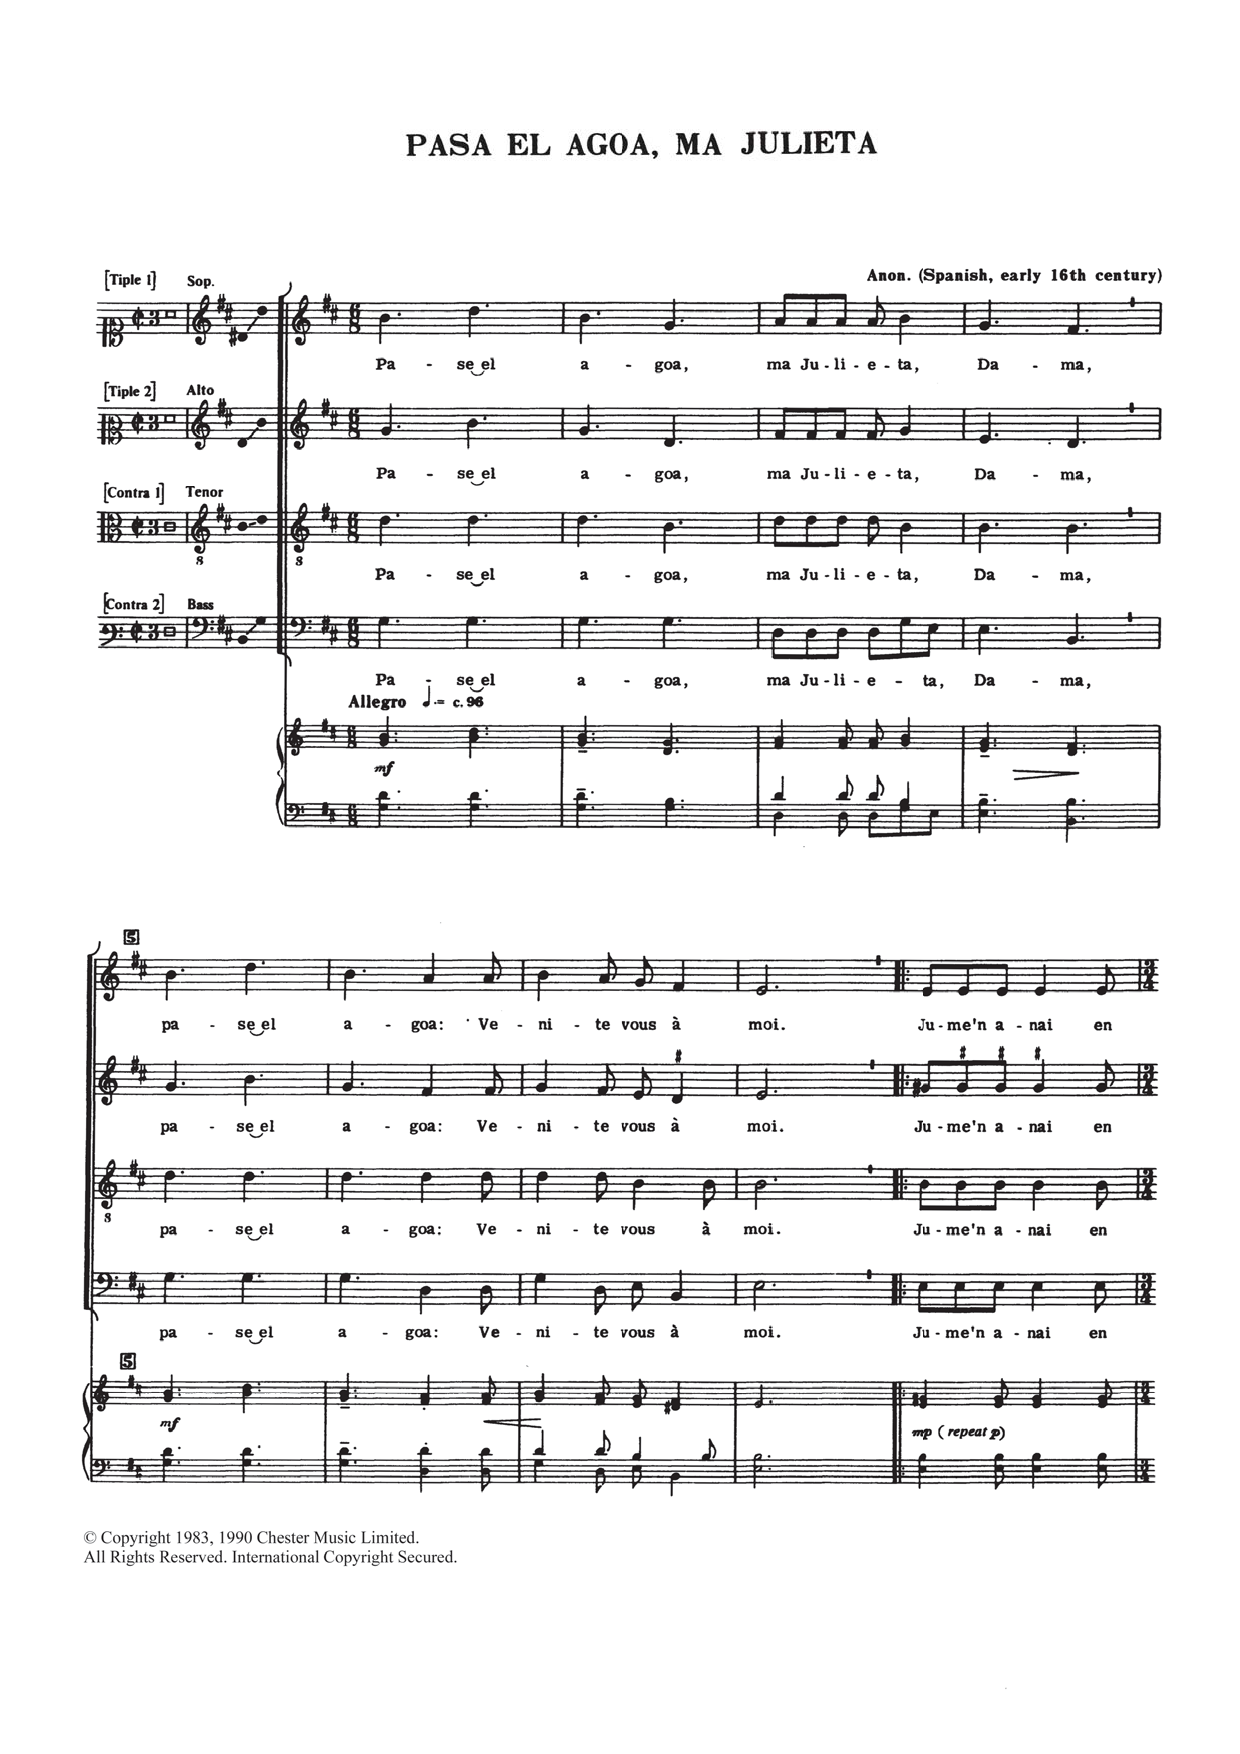 Traditional Pase El Agoa, Ma Julieta Sheet Music Notes & Chords for Choir - Download or Print PDF